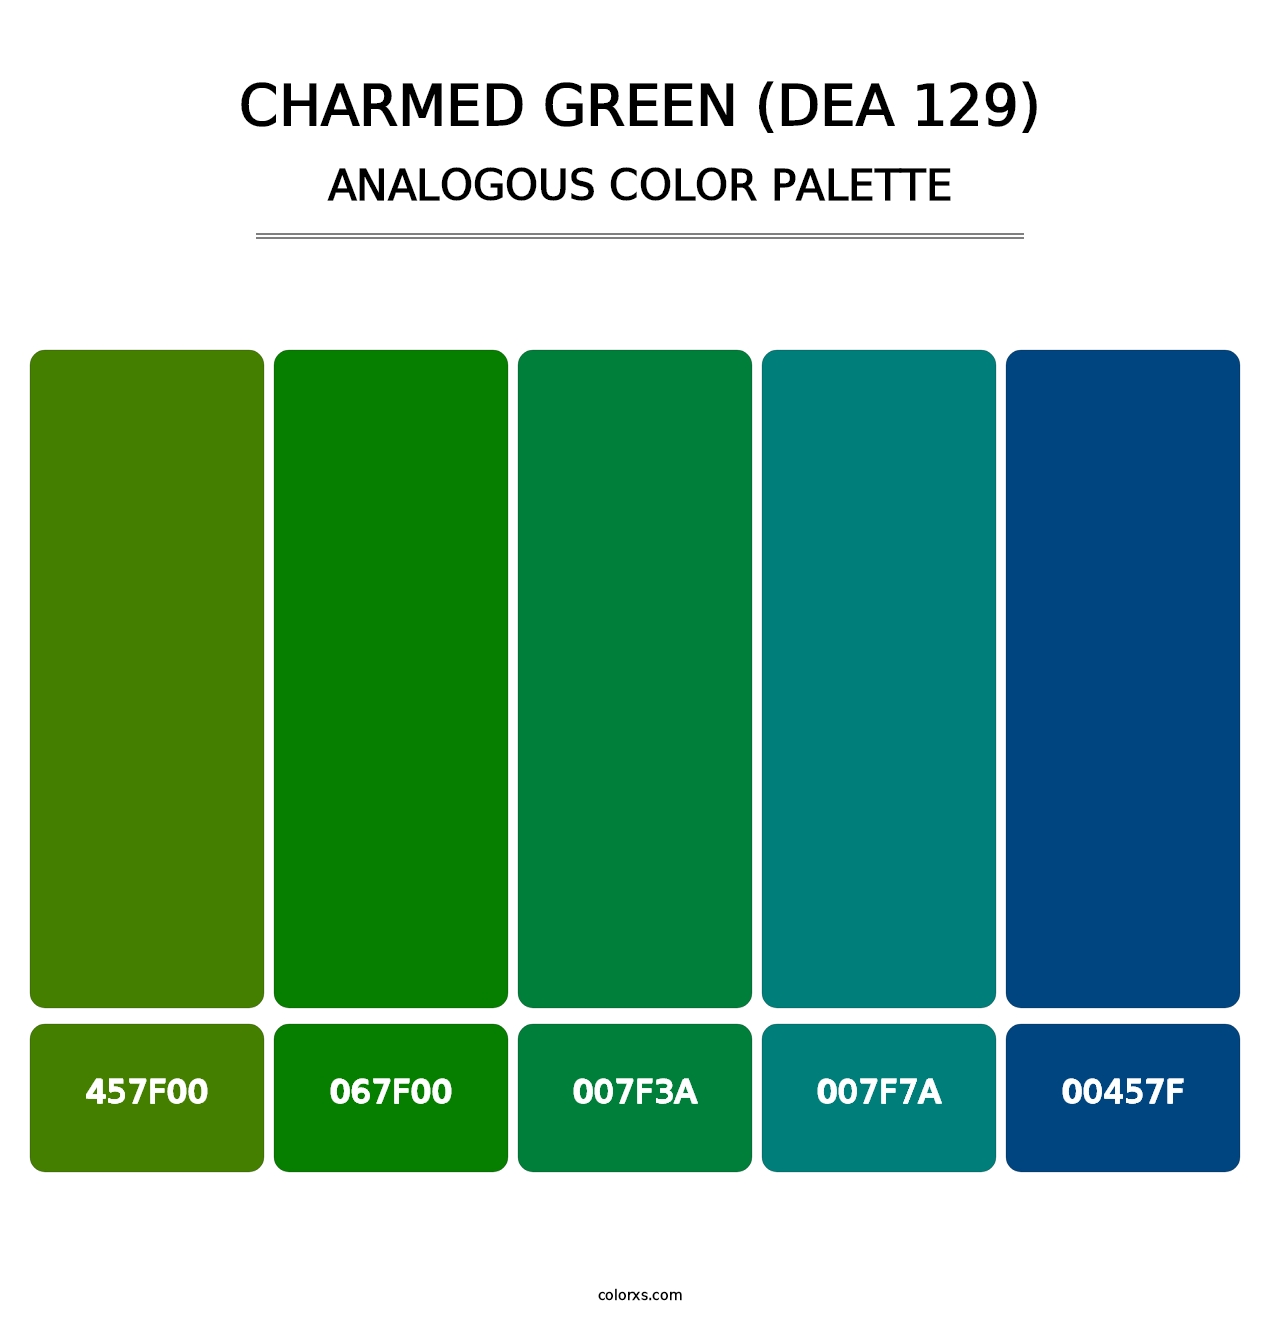 Charmed Green (DEA 129) - Analogous Color Palette